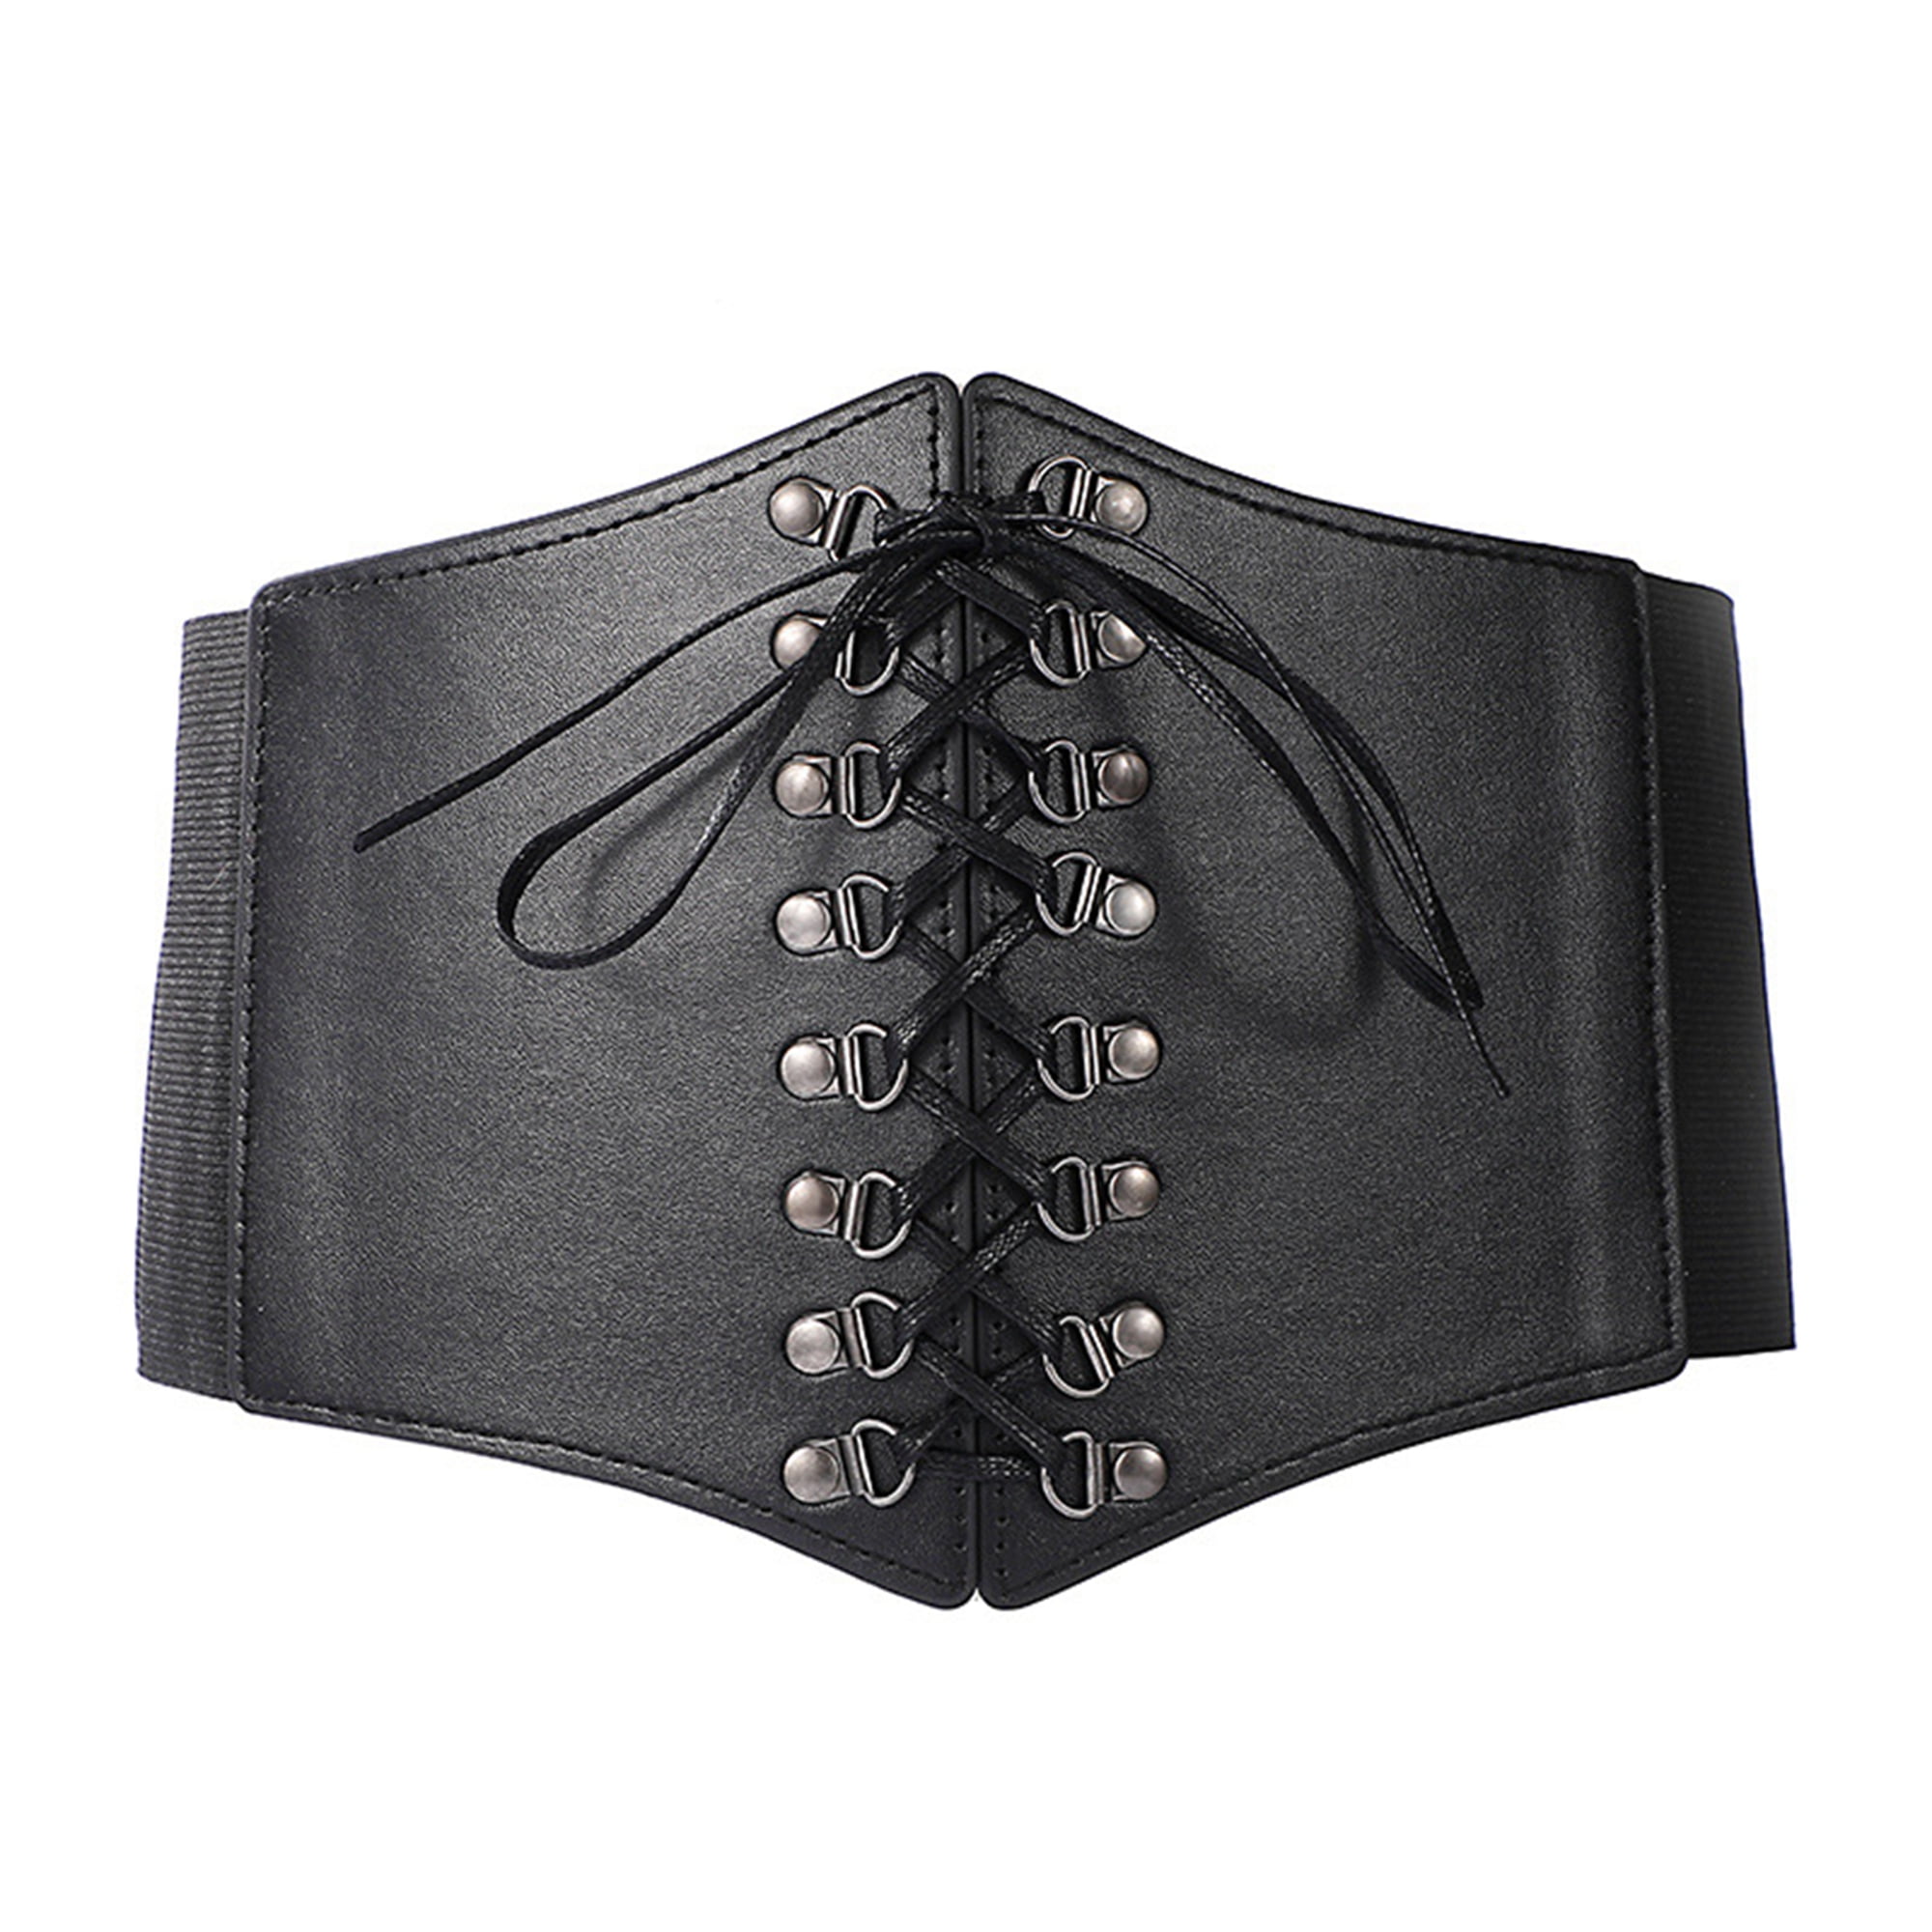 JYYYBF Corset Belt for Women Leather Belt Wide Waist Belt Elastic